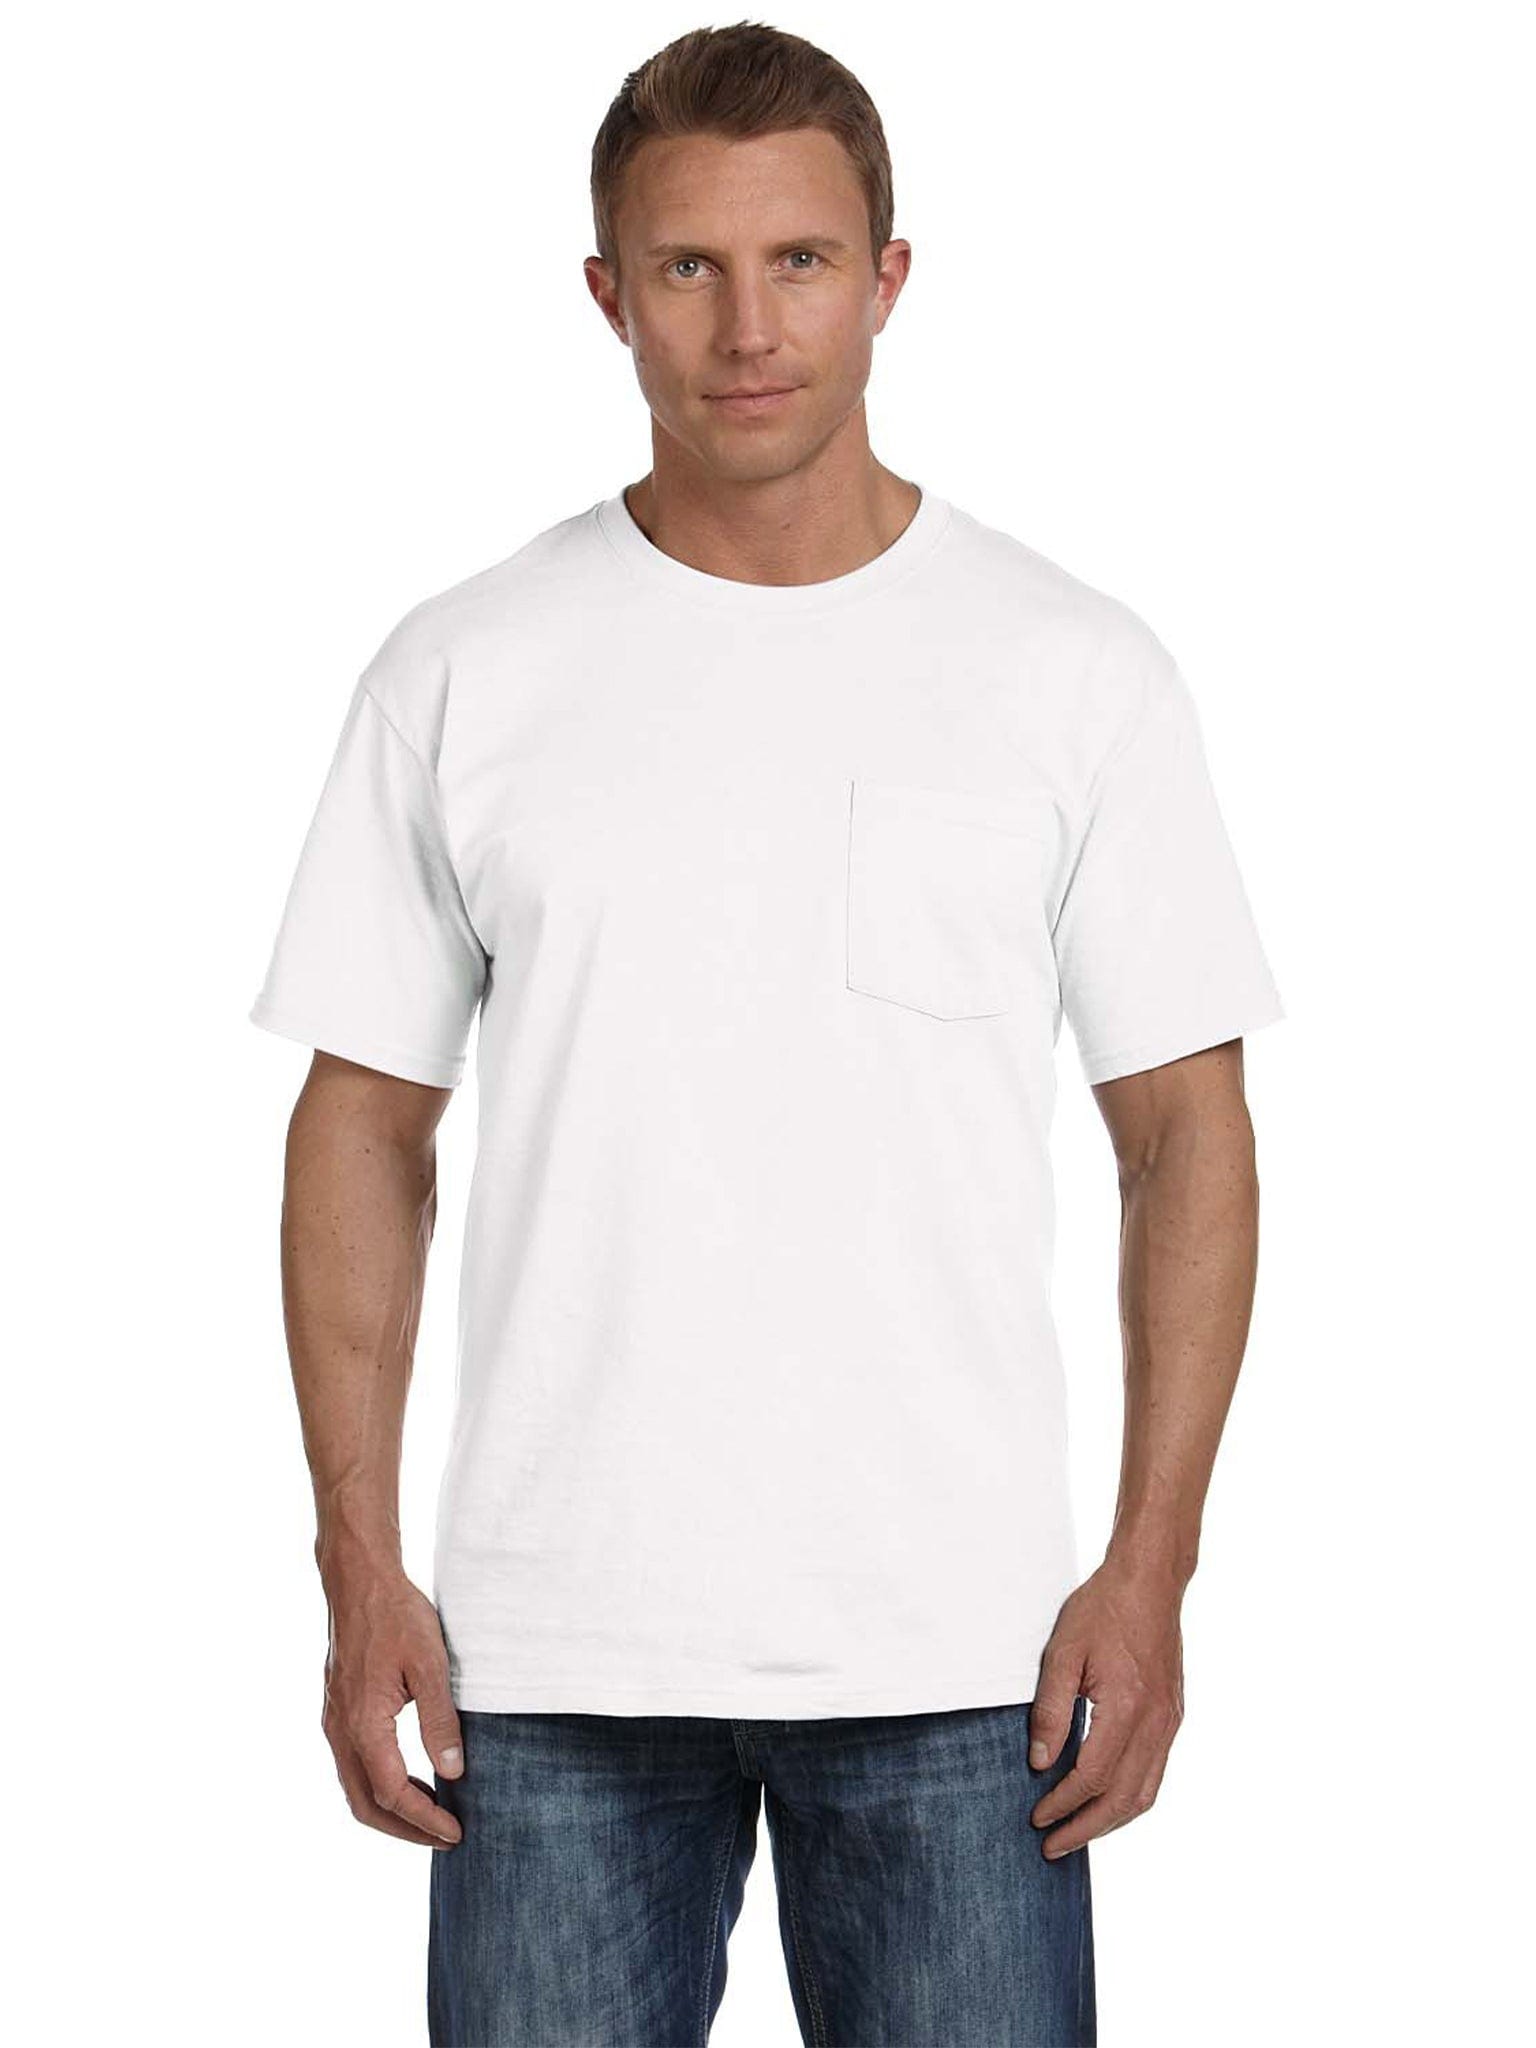 Men's Pocket T-Shirts